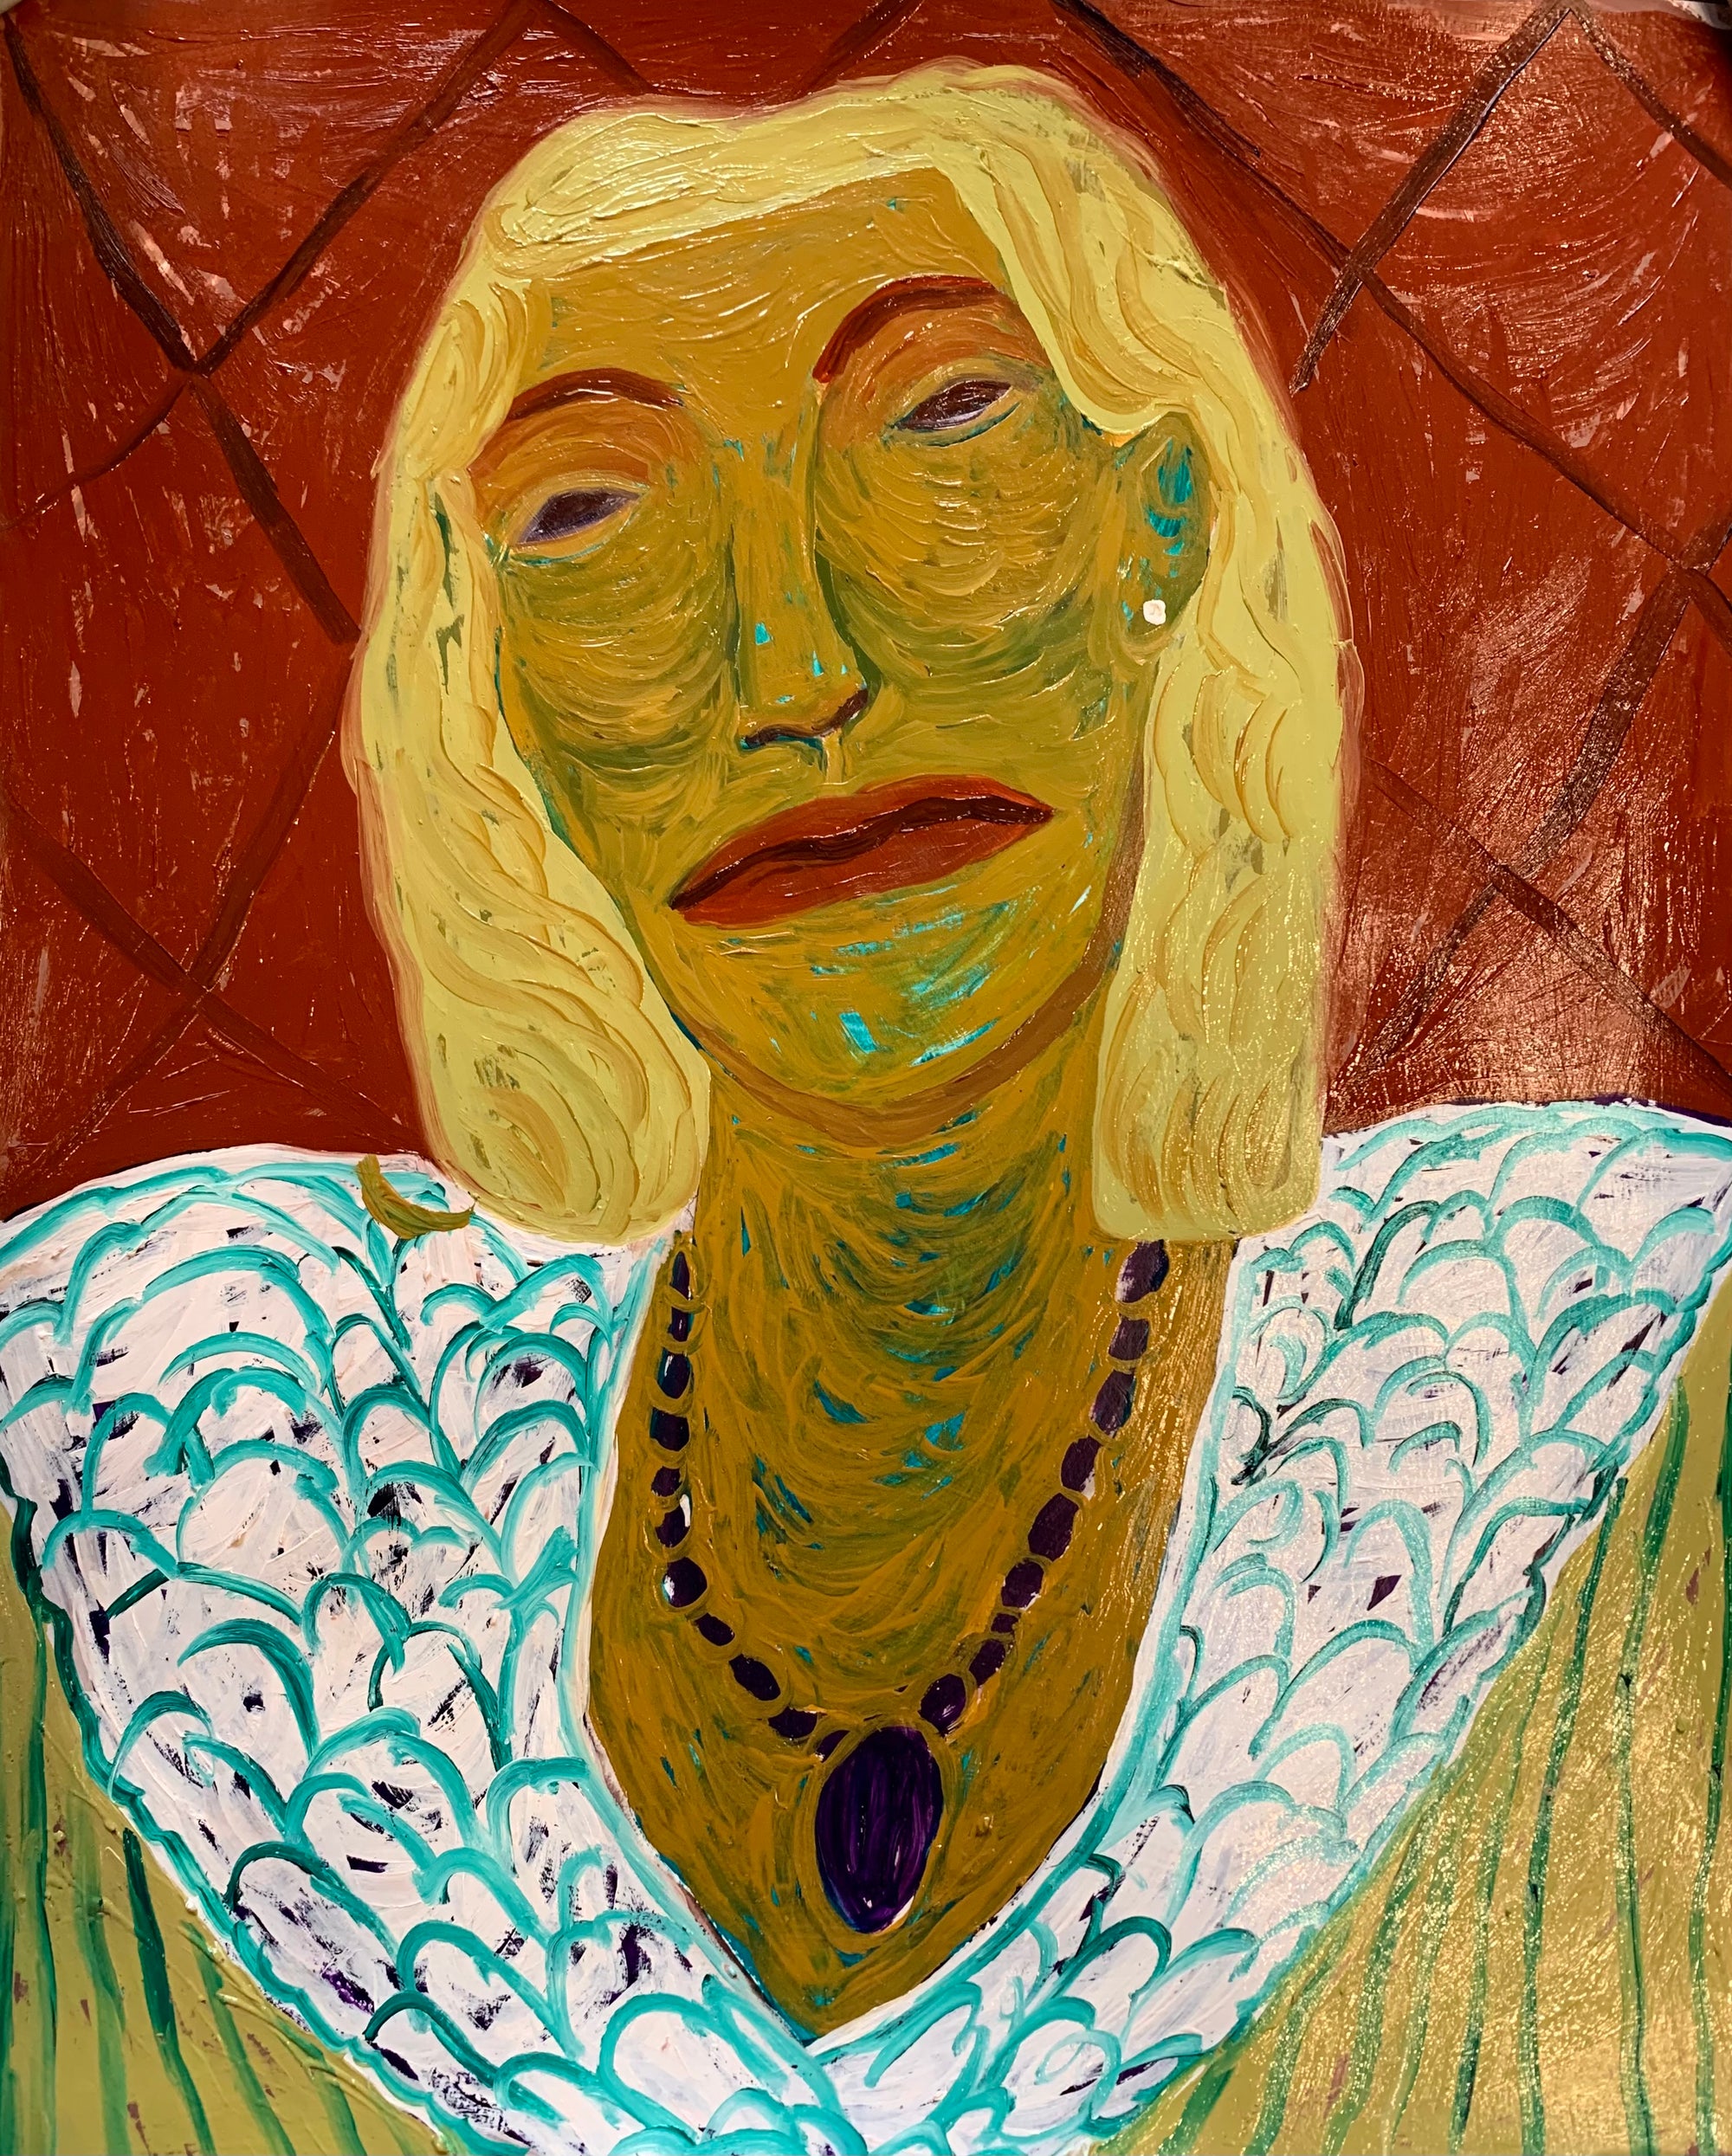 A Woman’s portrait with a necklace